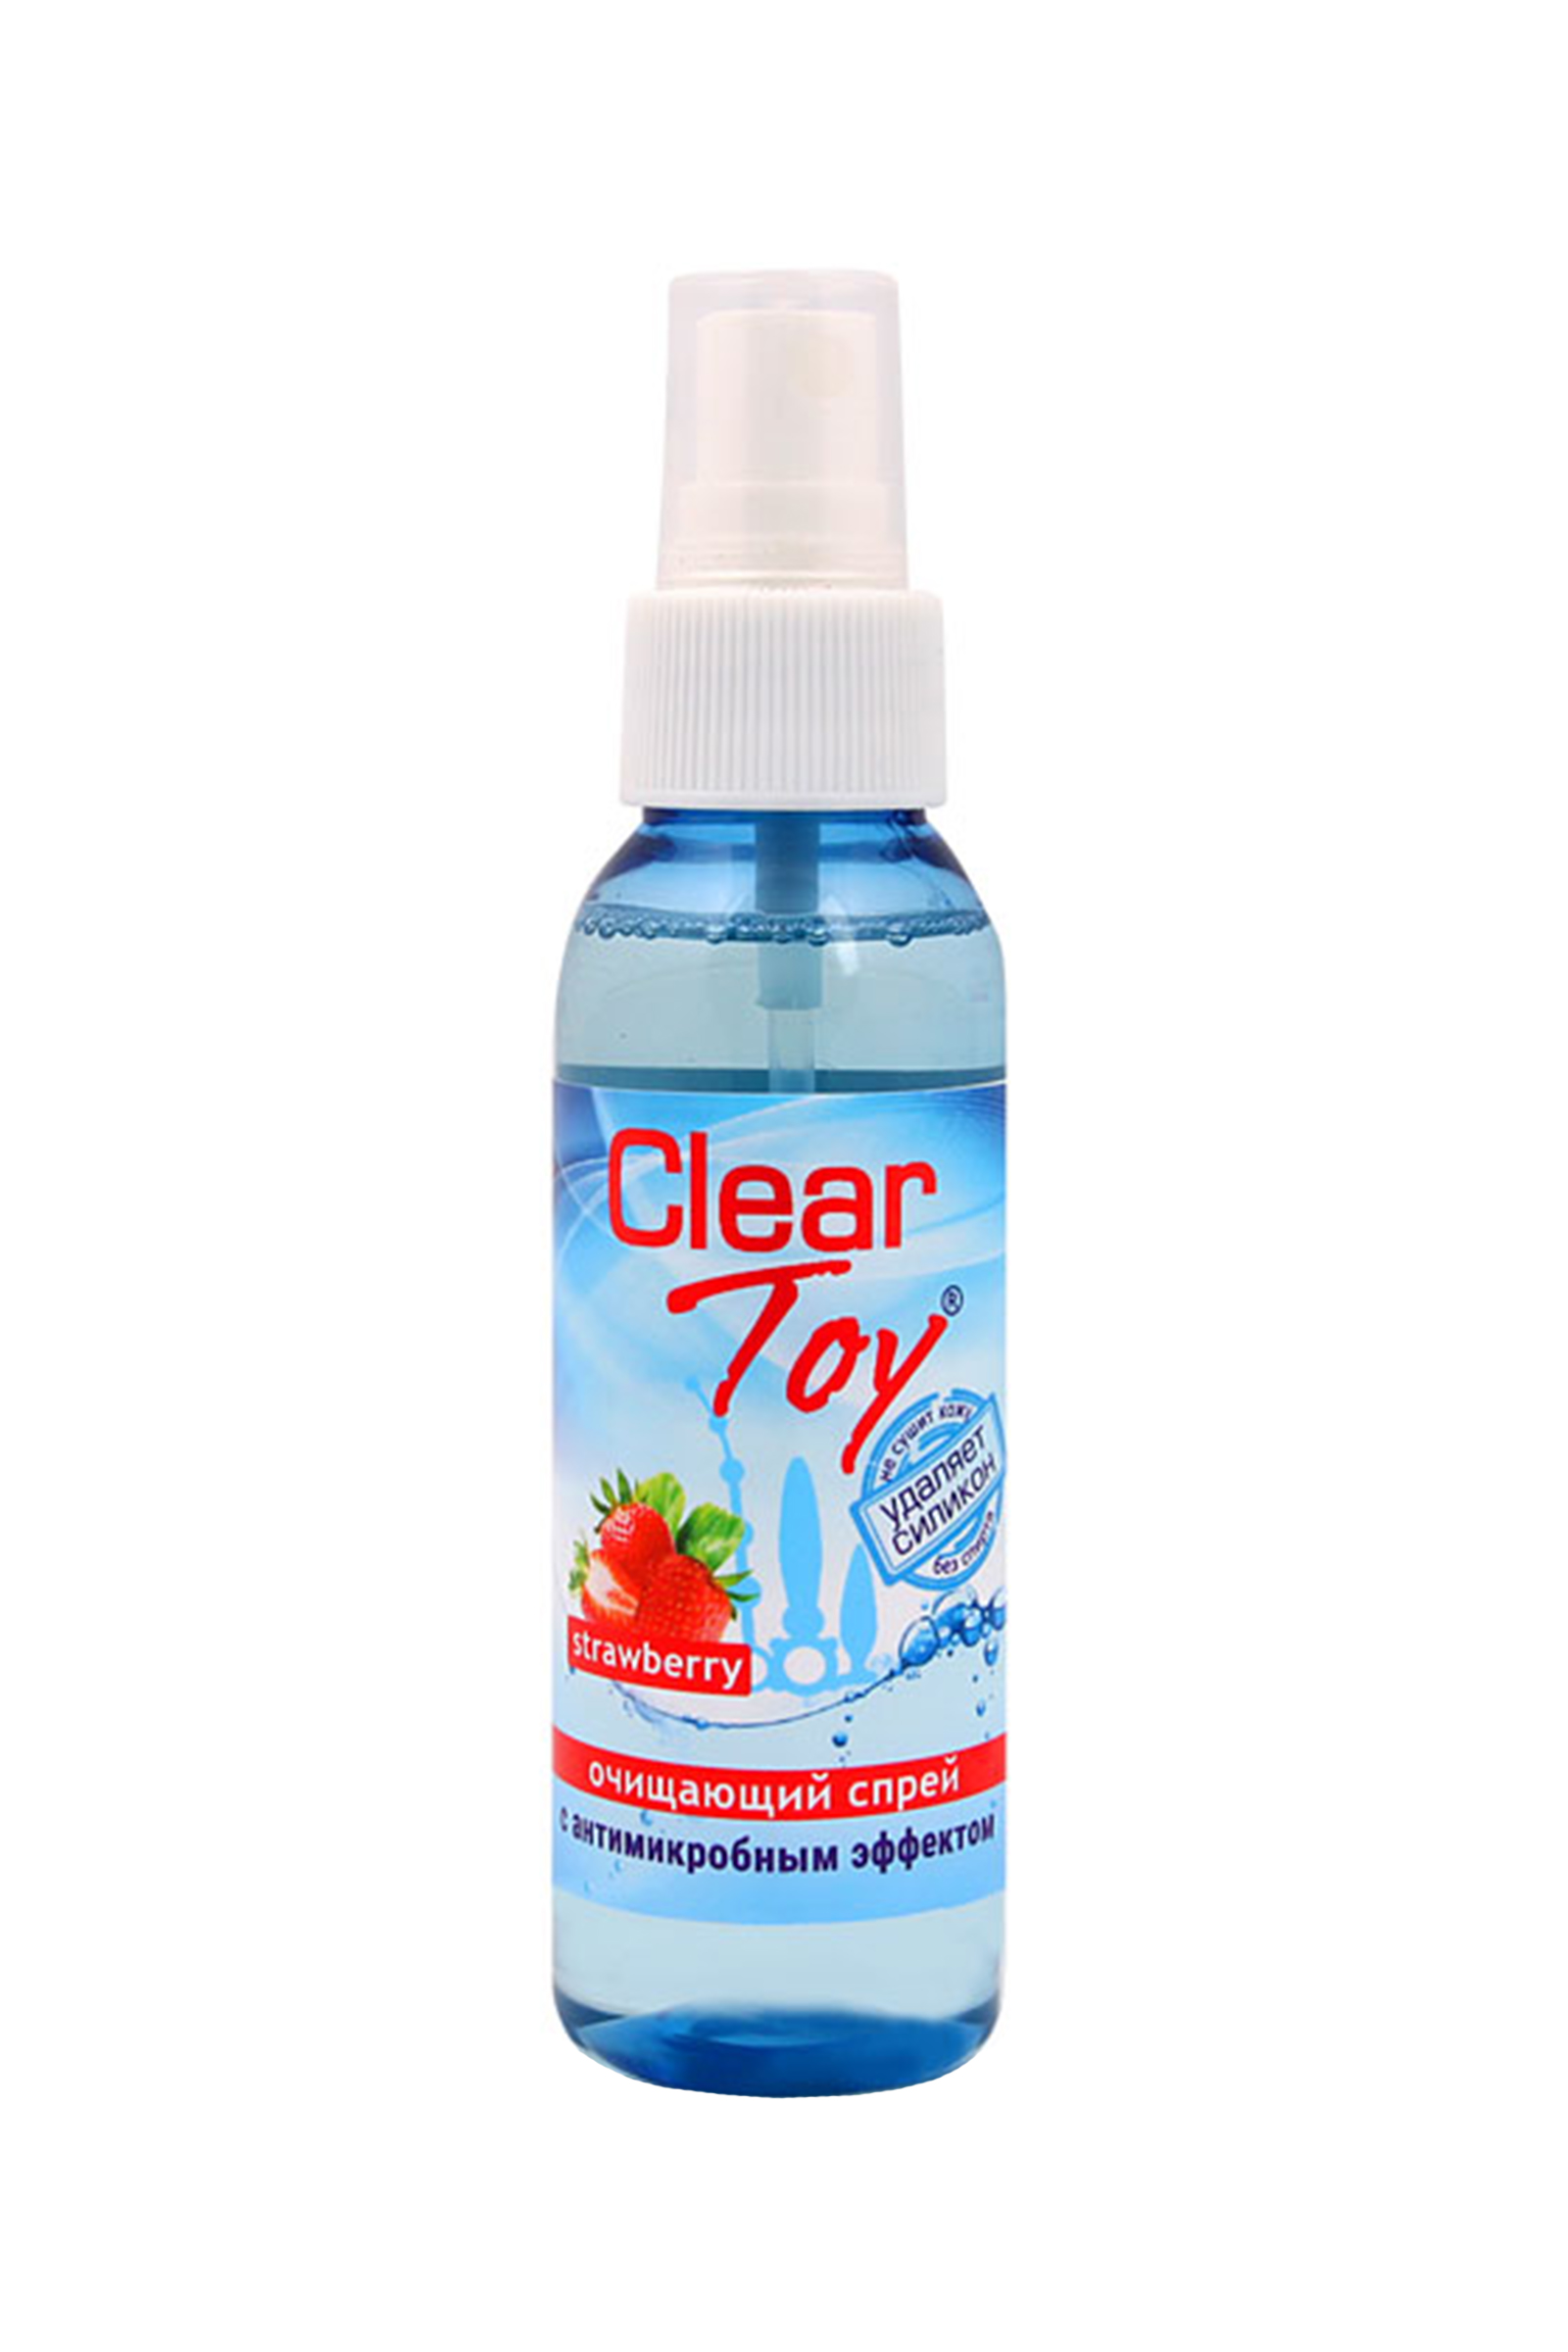 Очищающий спрей "CLEAR TOYS STRAWBERRY" с антимикробным эффектом, 100 мл. Фото N2